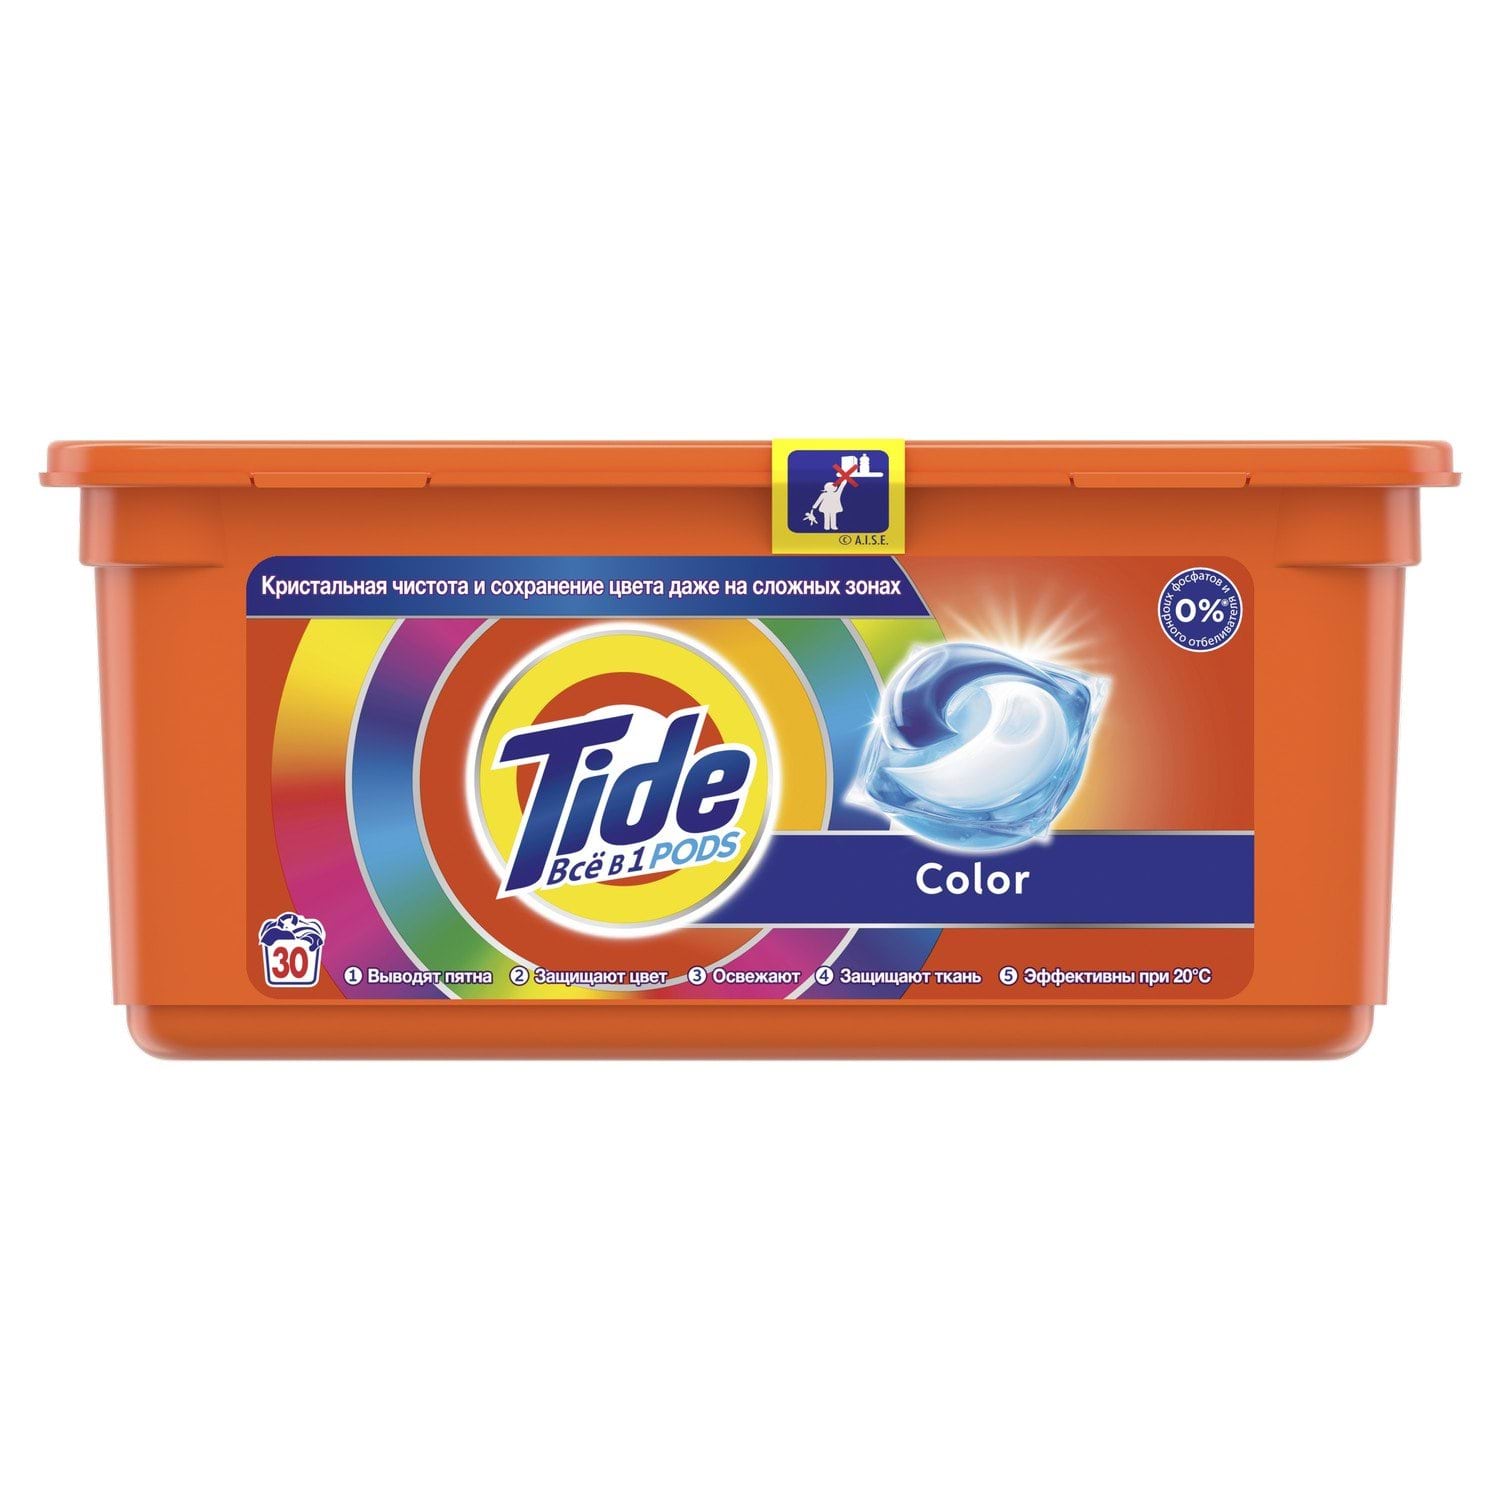 Каспули для прання Tide Pods Все-в-1 Color, 30 шт, 